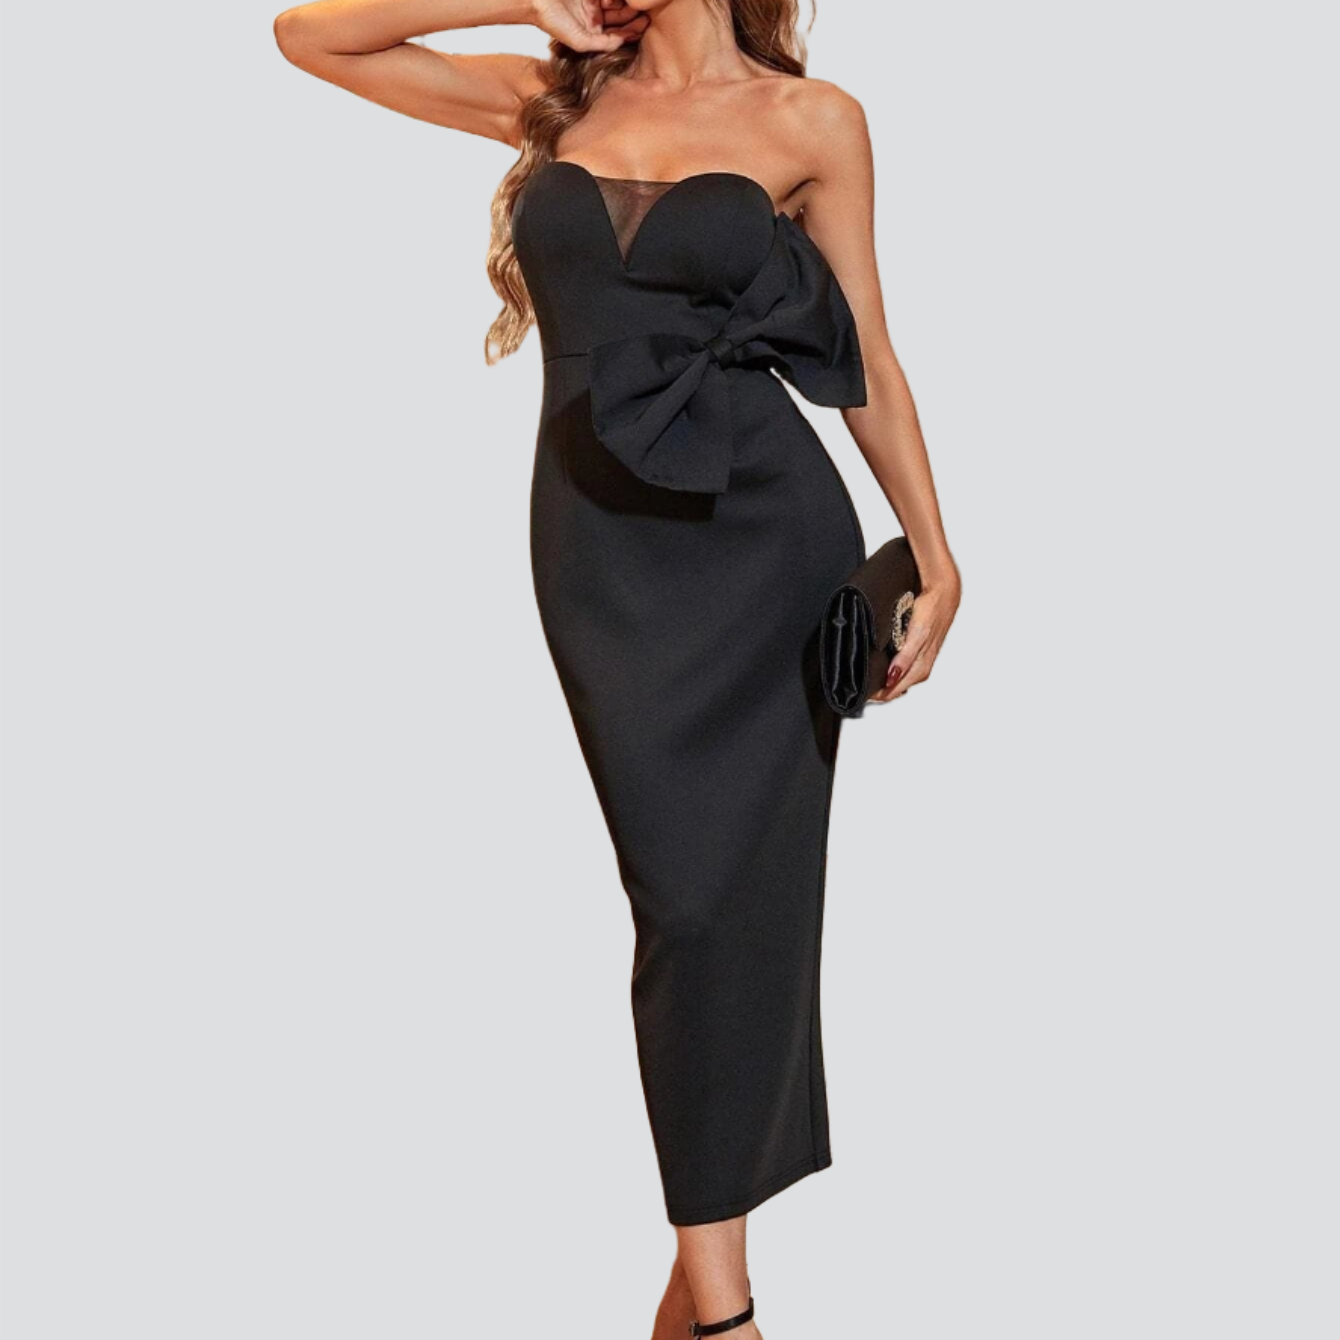 Bow Front Tube Black Mini Knit Prom Dress XJ873